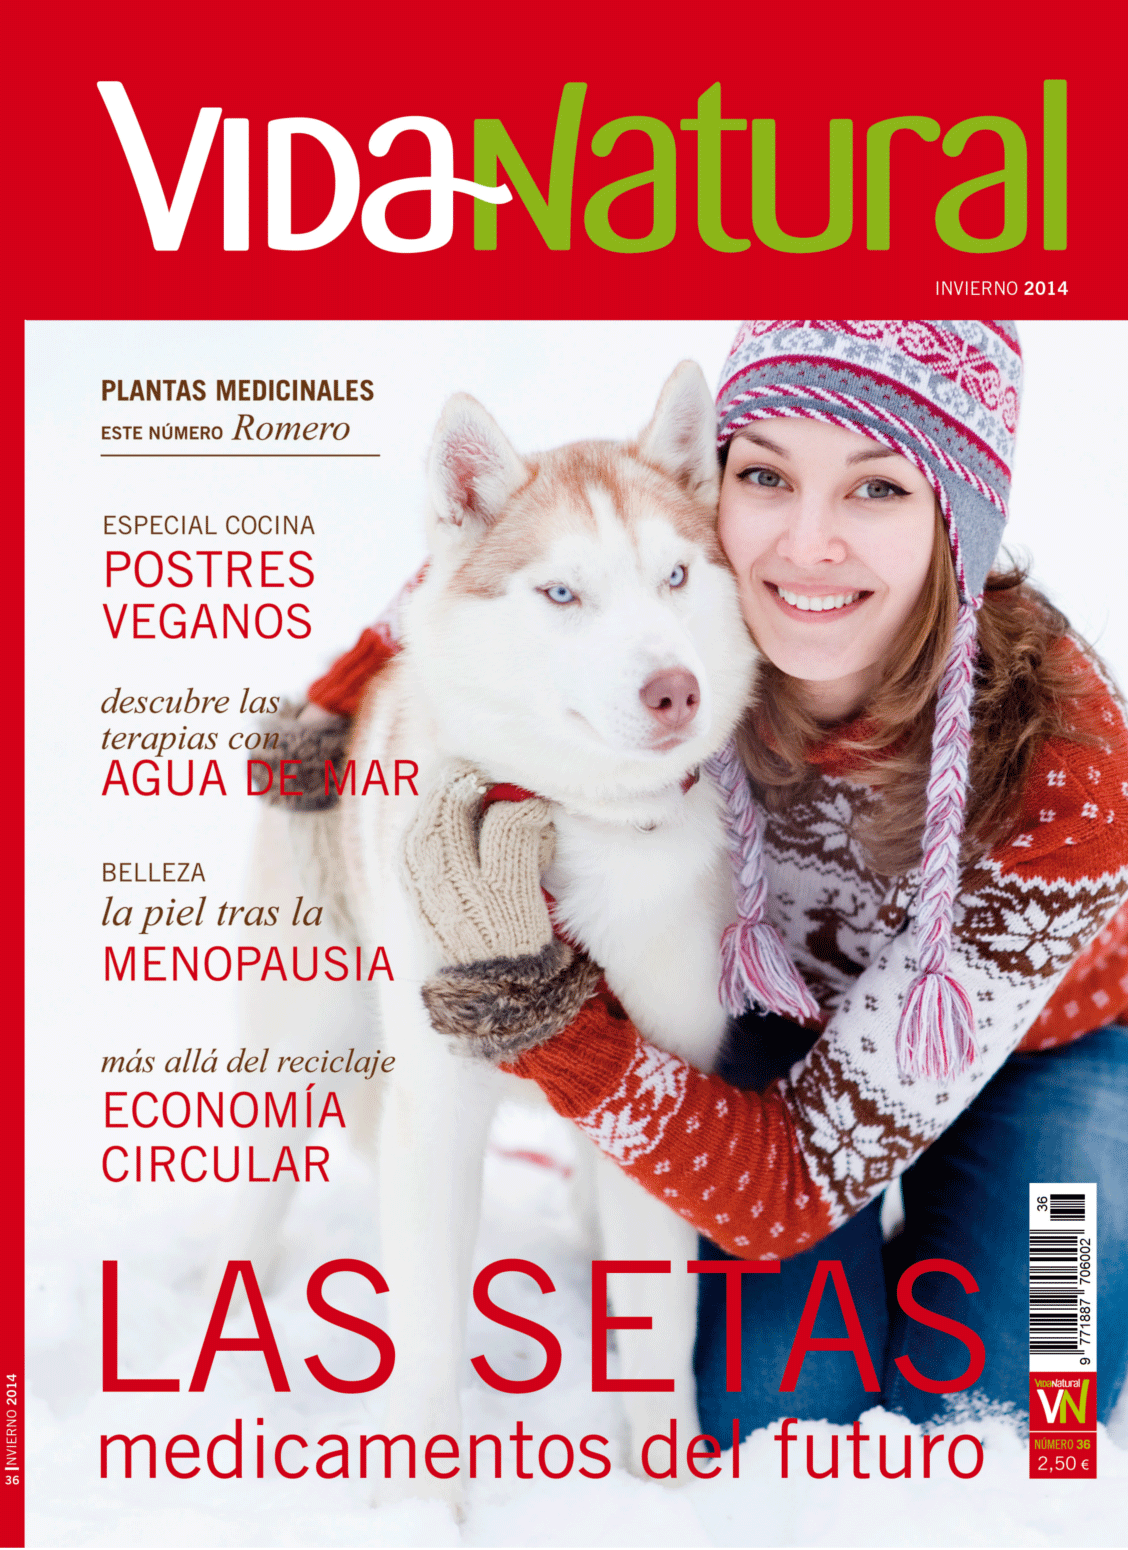 Revista Vida Natural nº 36 - Invierno de 2014